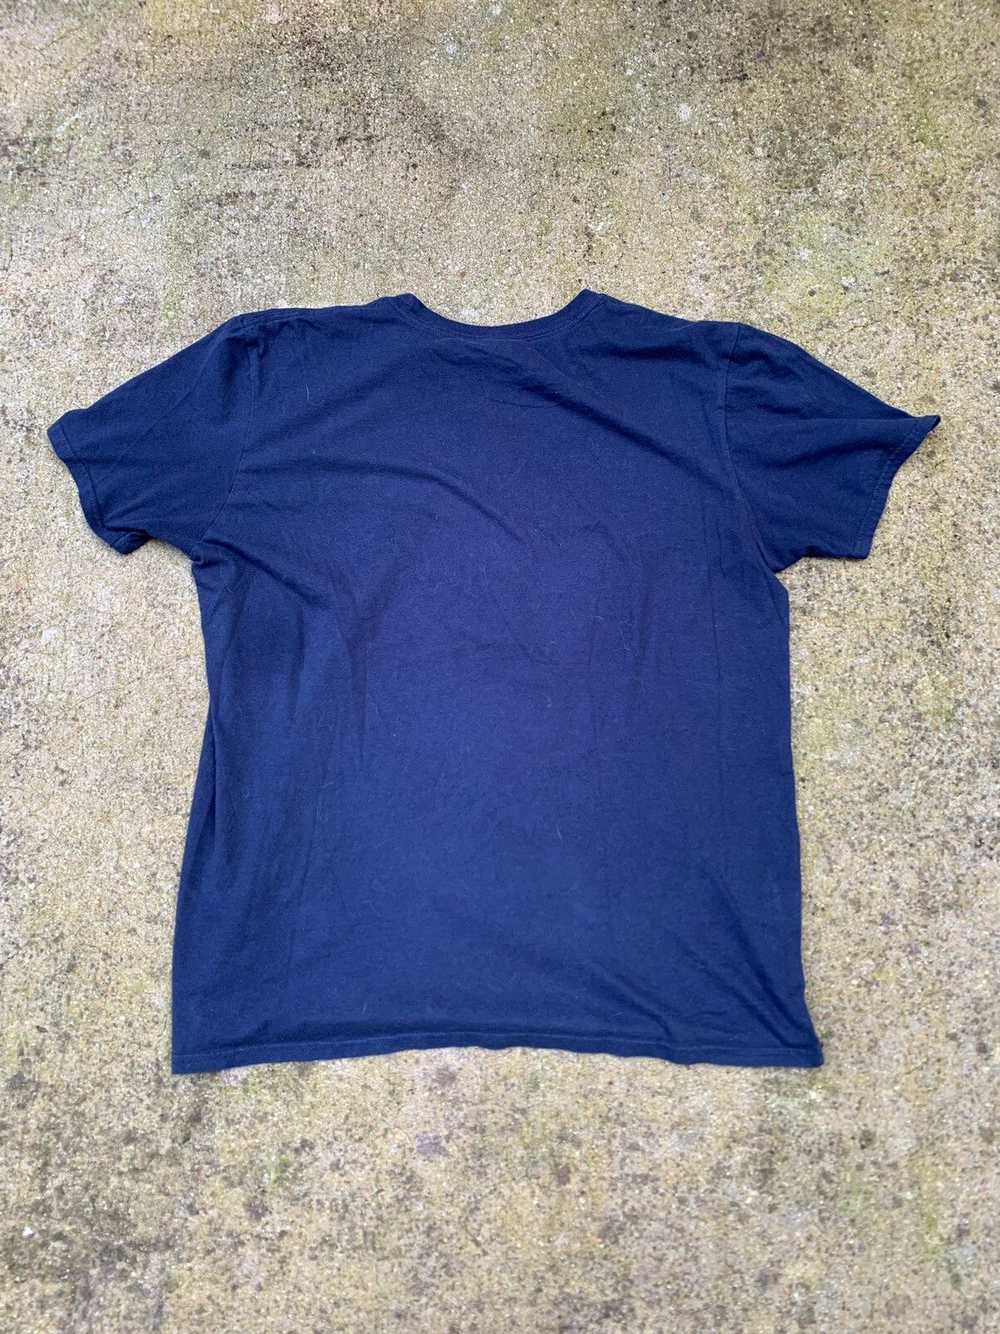 Animal Tee × Outdoor Life × Vintage Shark T Shirt - image 4